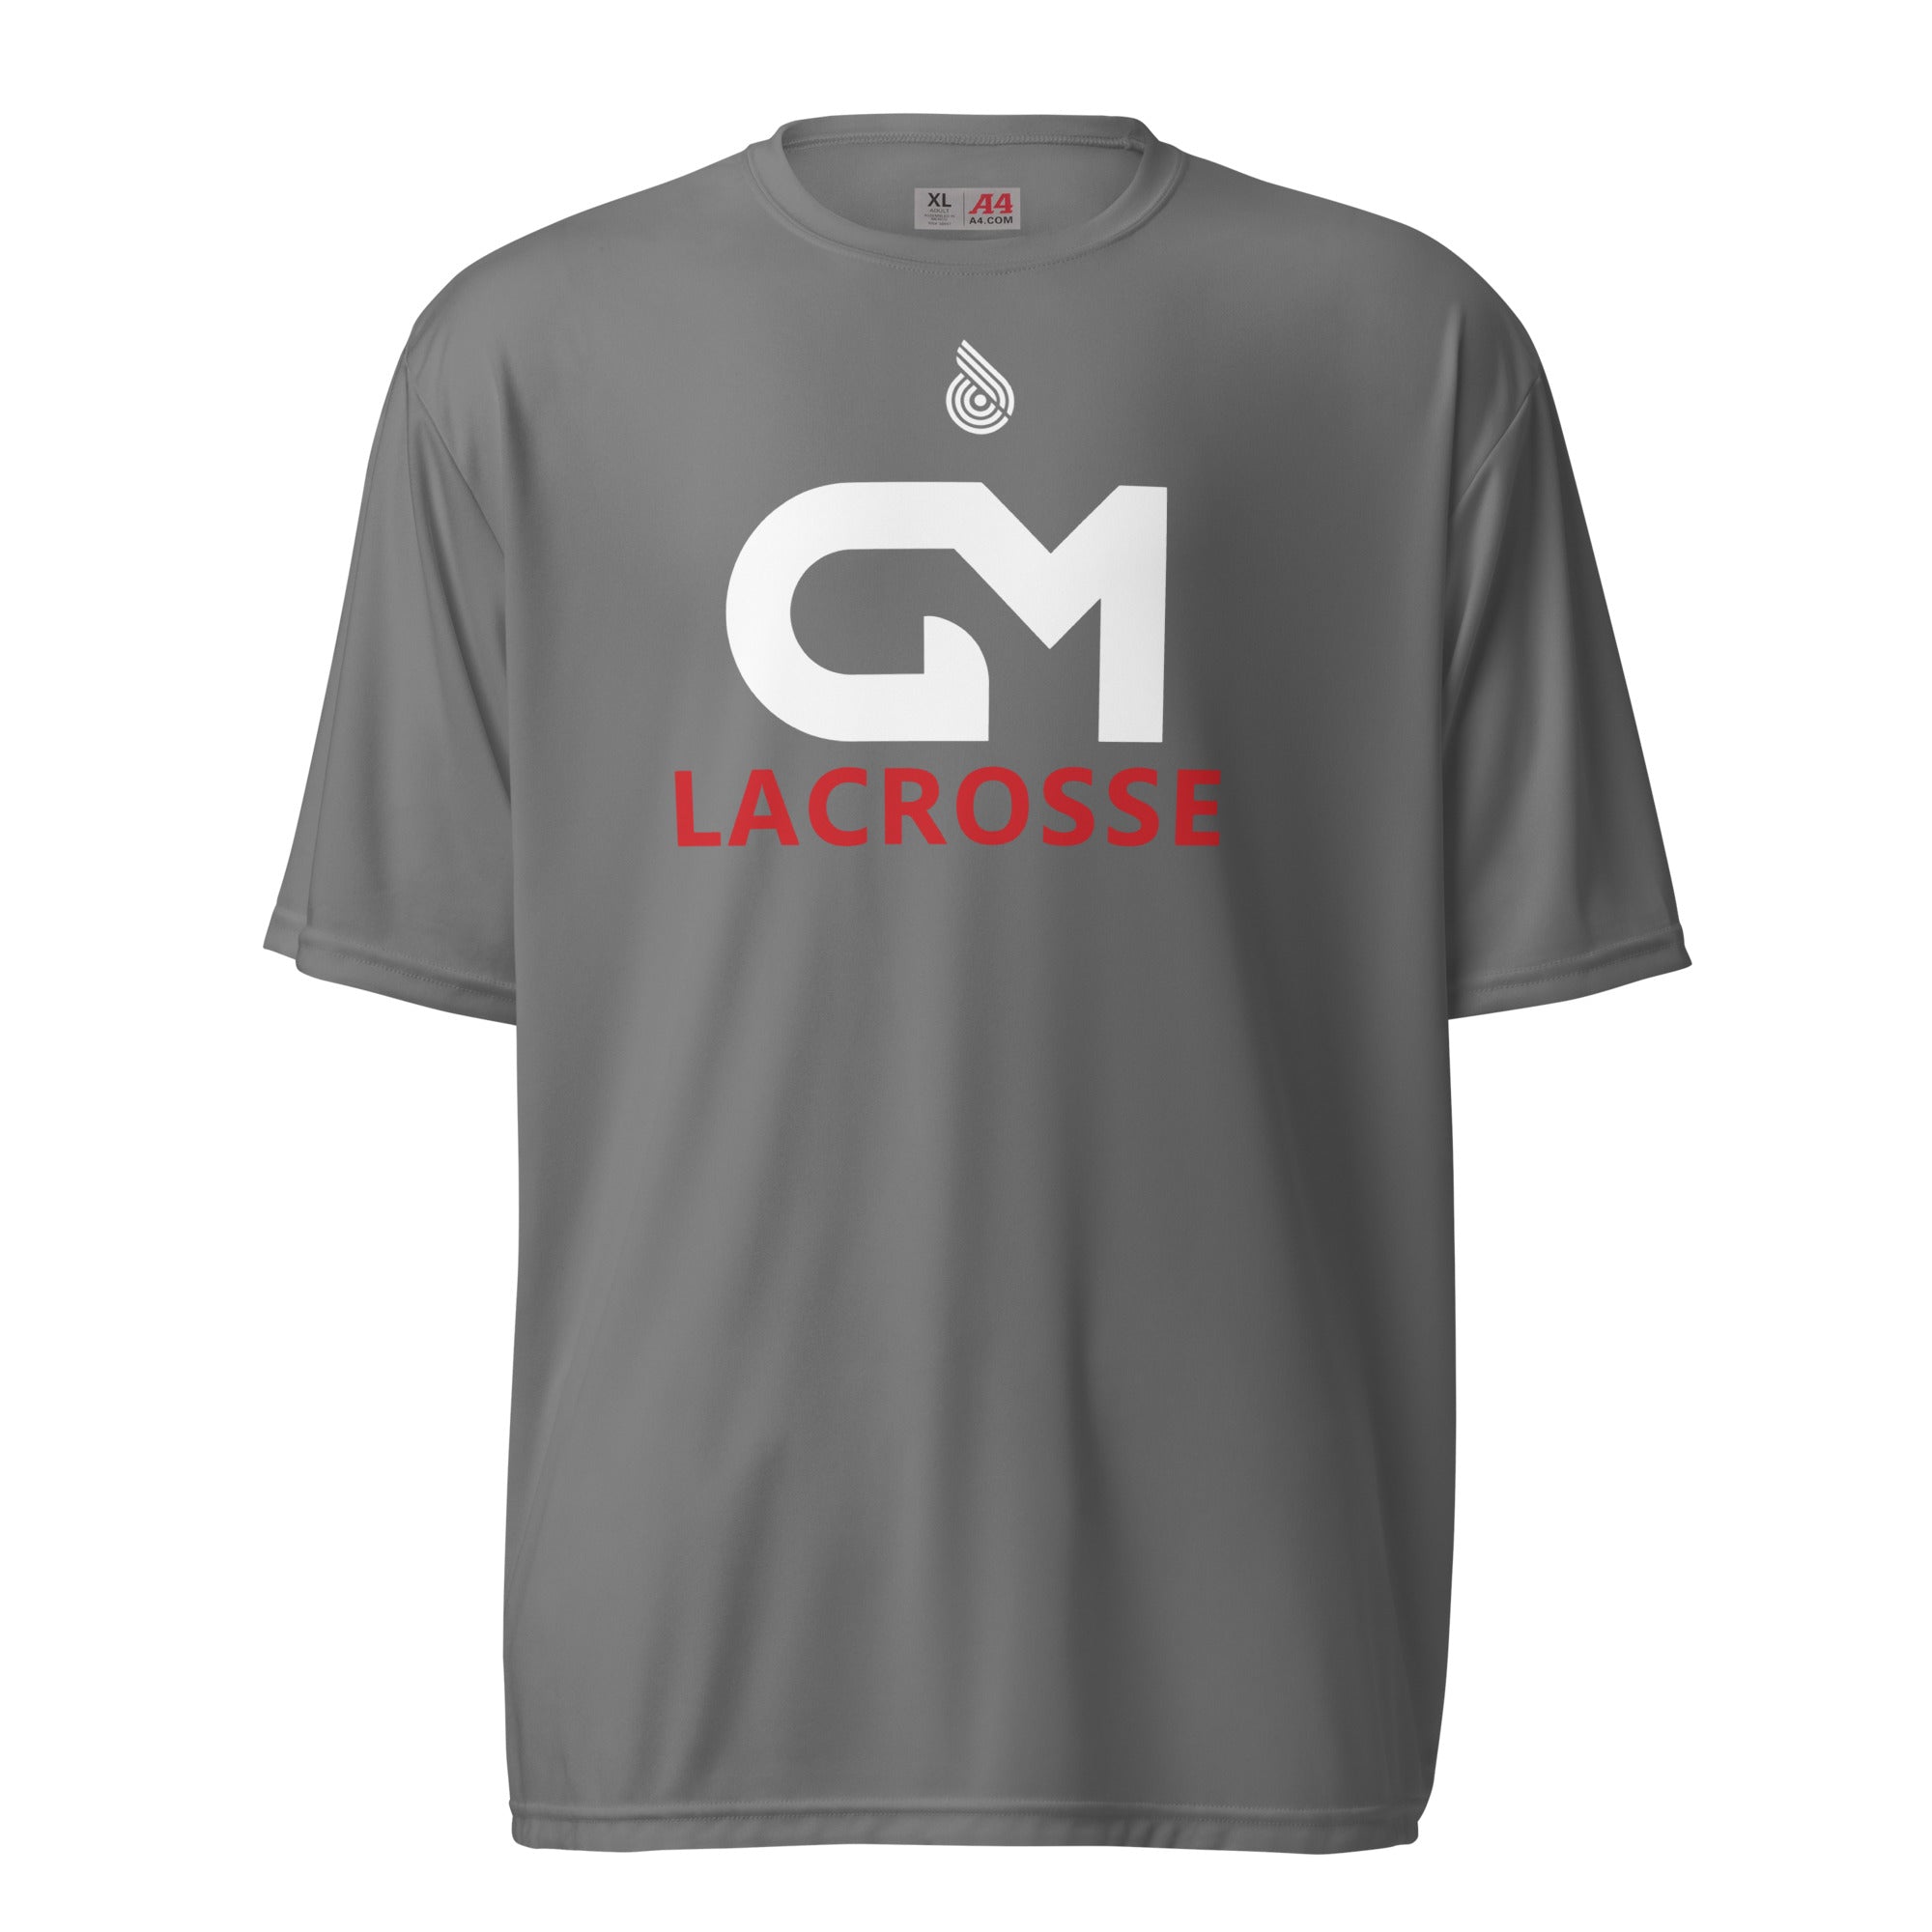 GMLA Unisex performance crew neck t-shirt